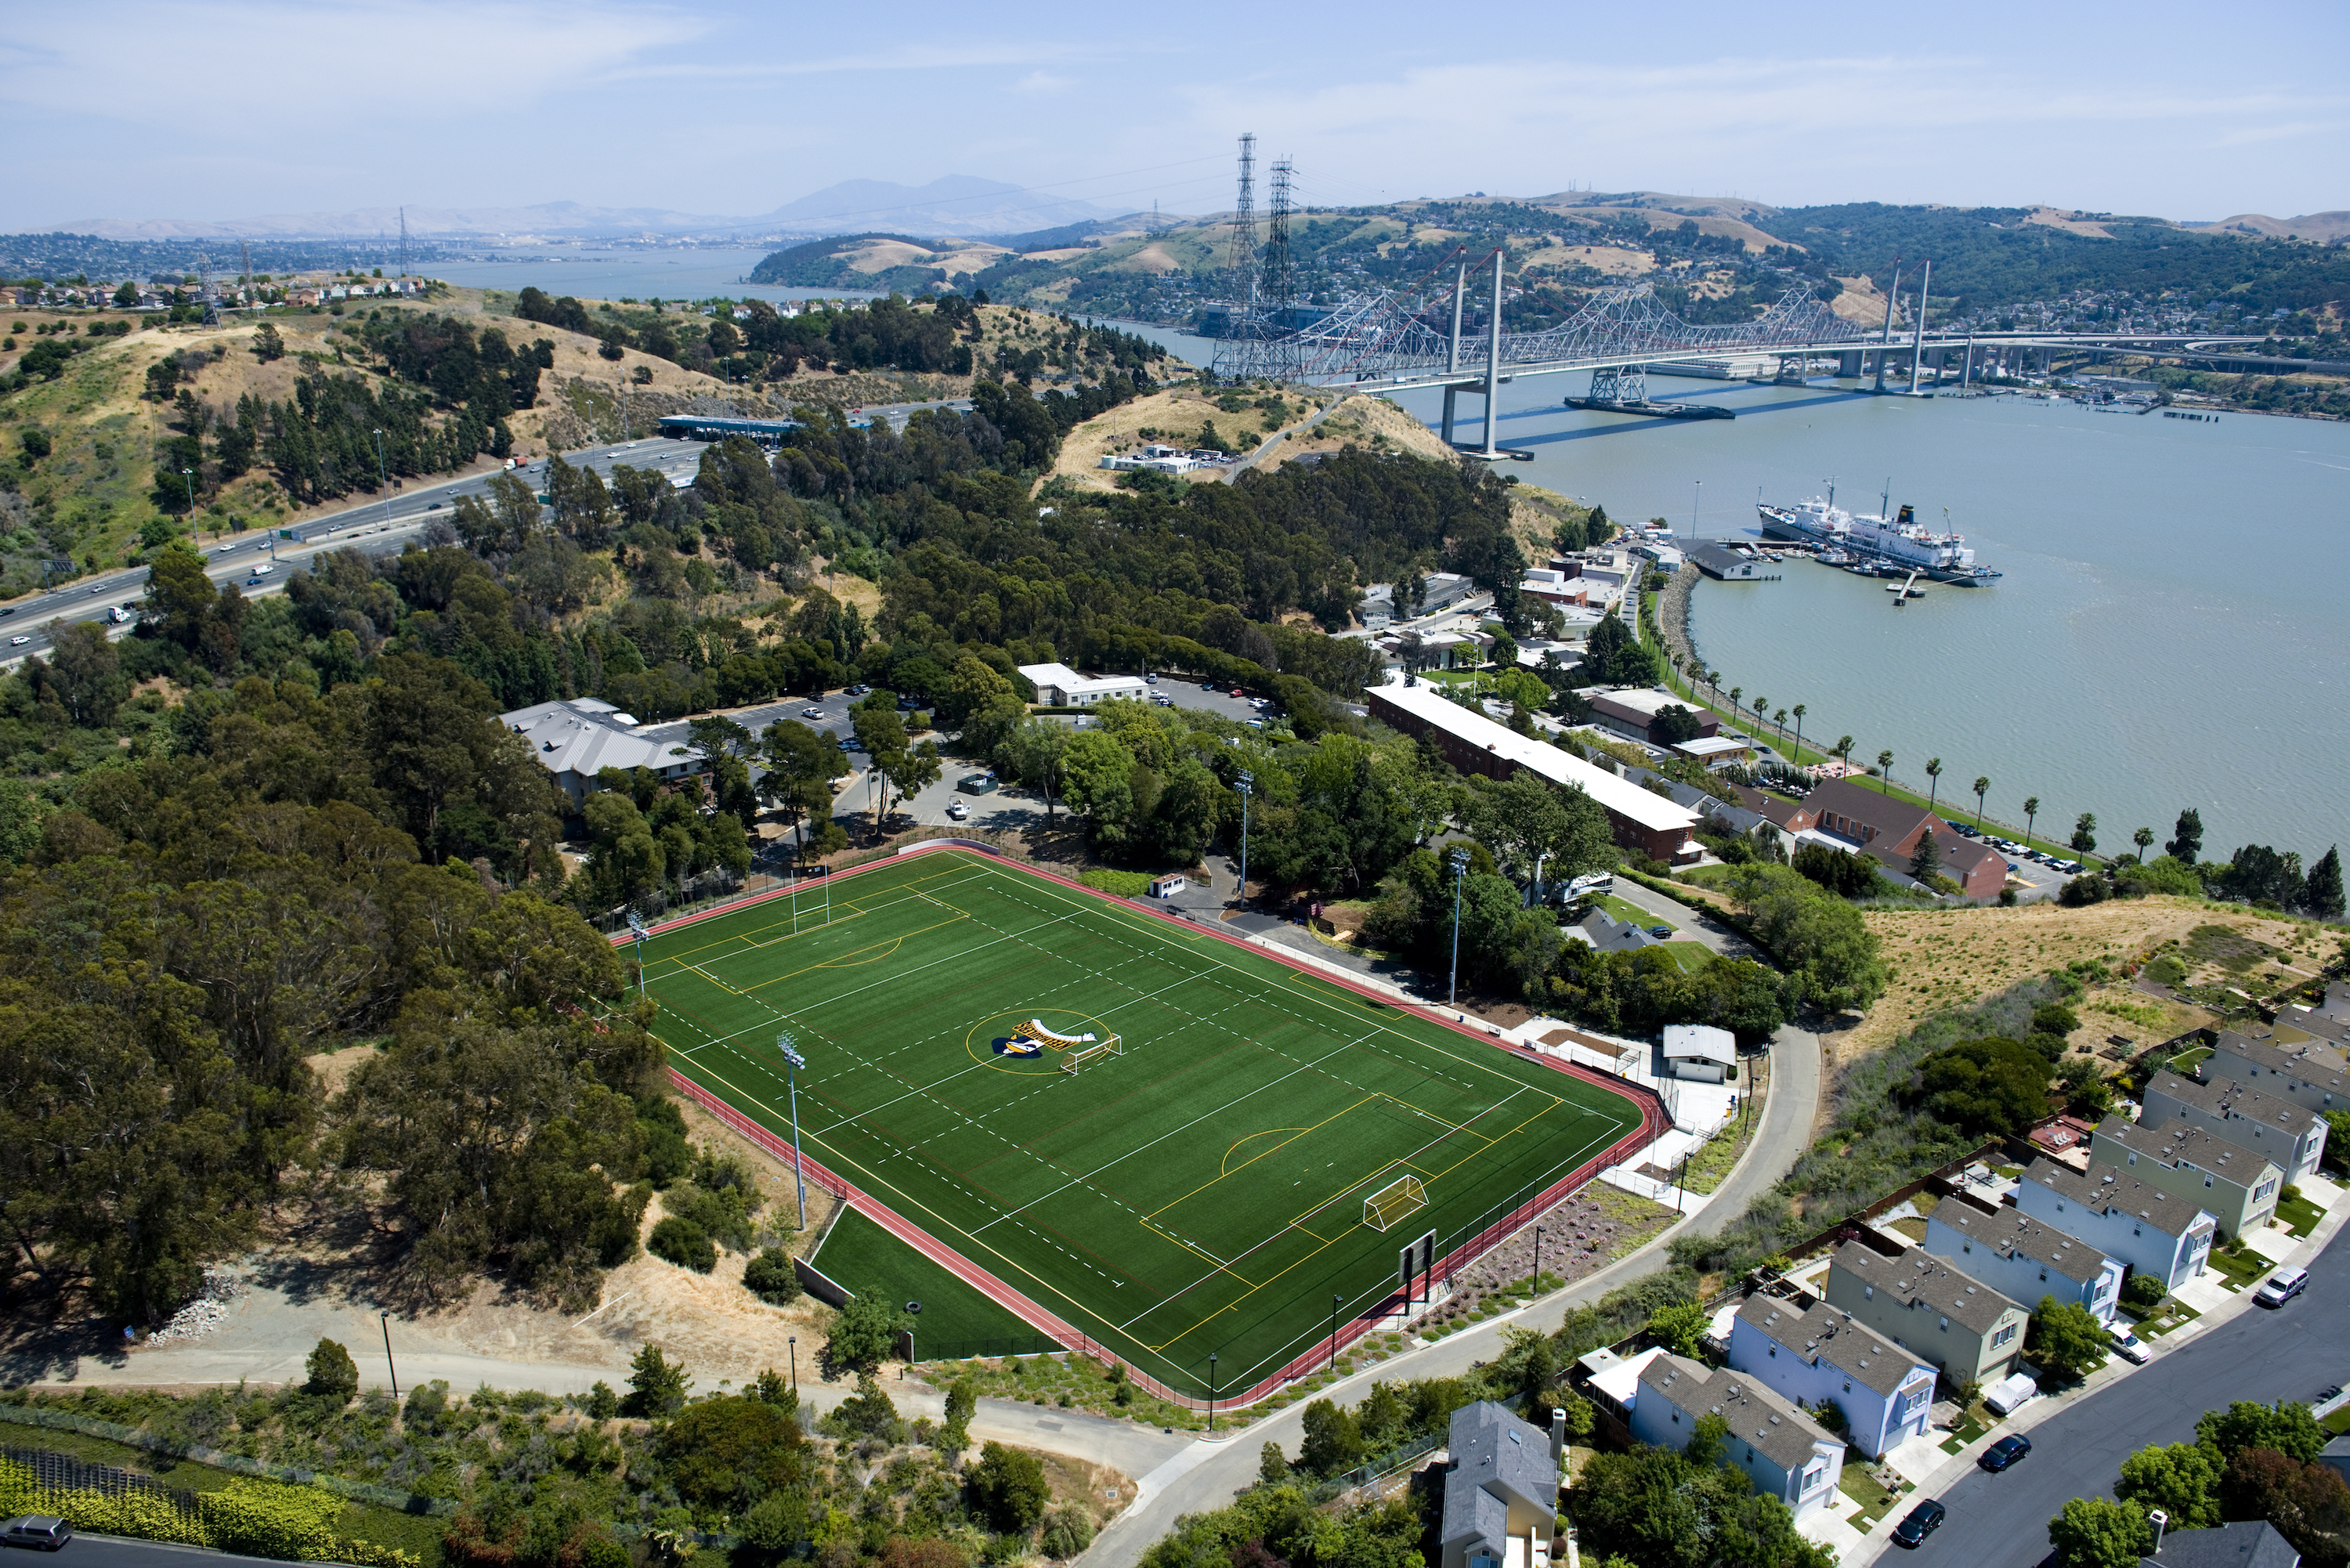 Aerial campus view of Cal Maritime